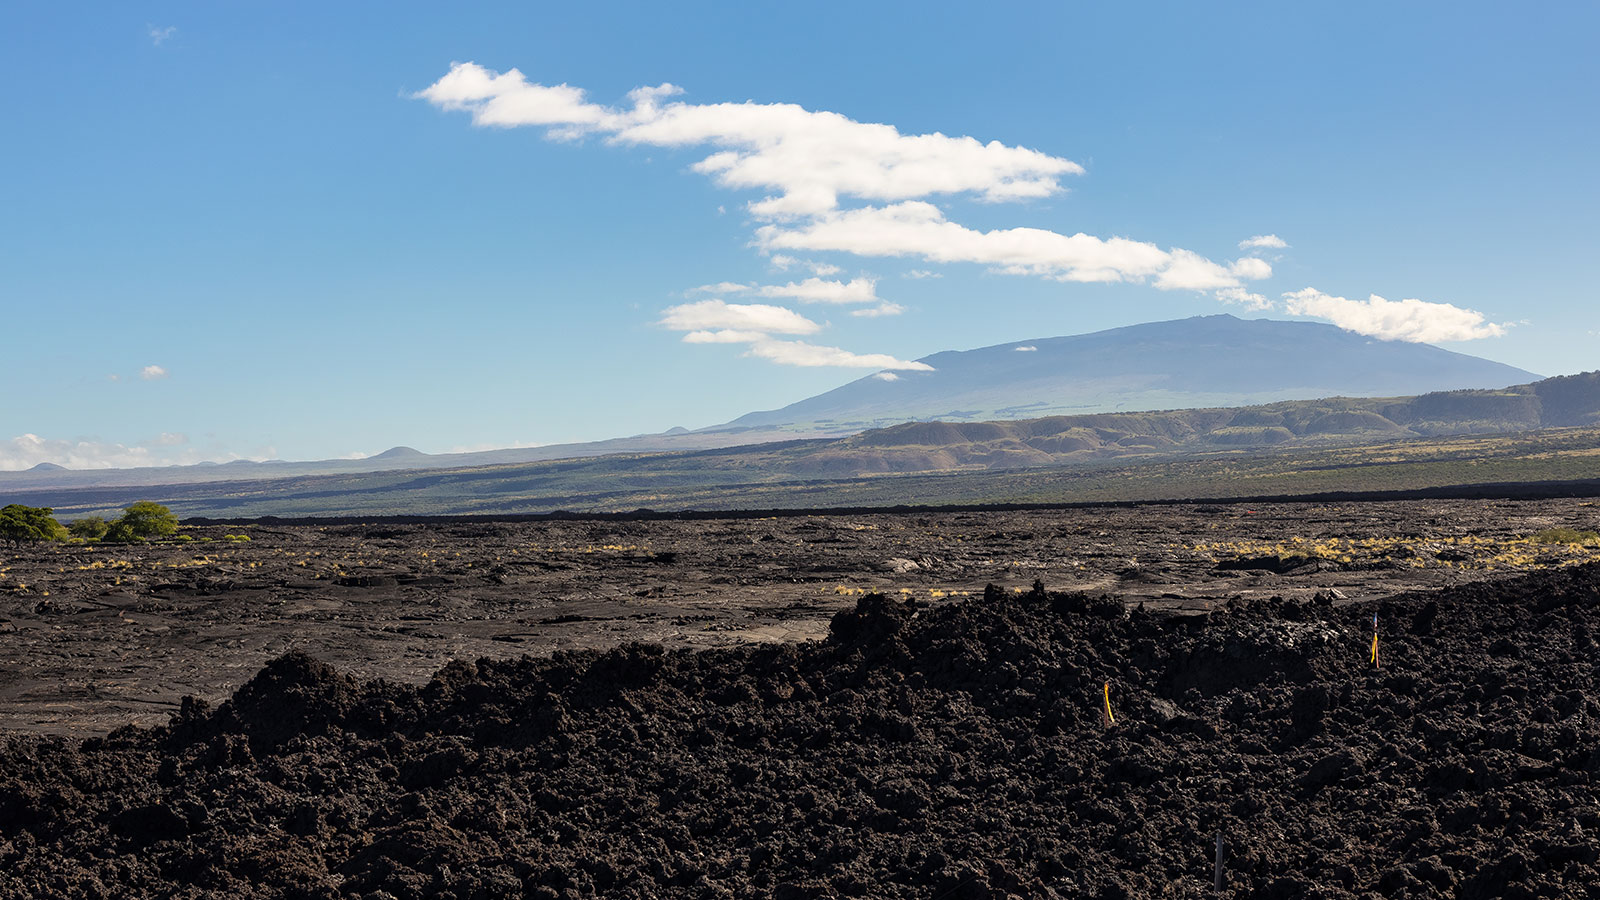 The dormant volcano Mauna Kea towers over big island Hawaii